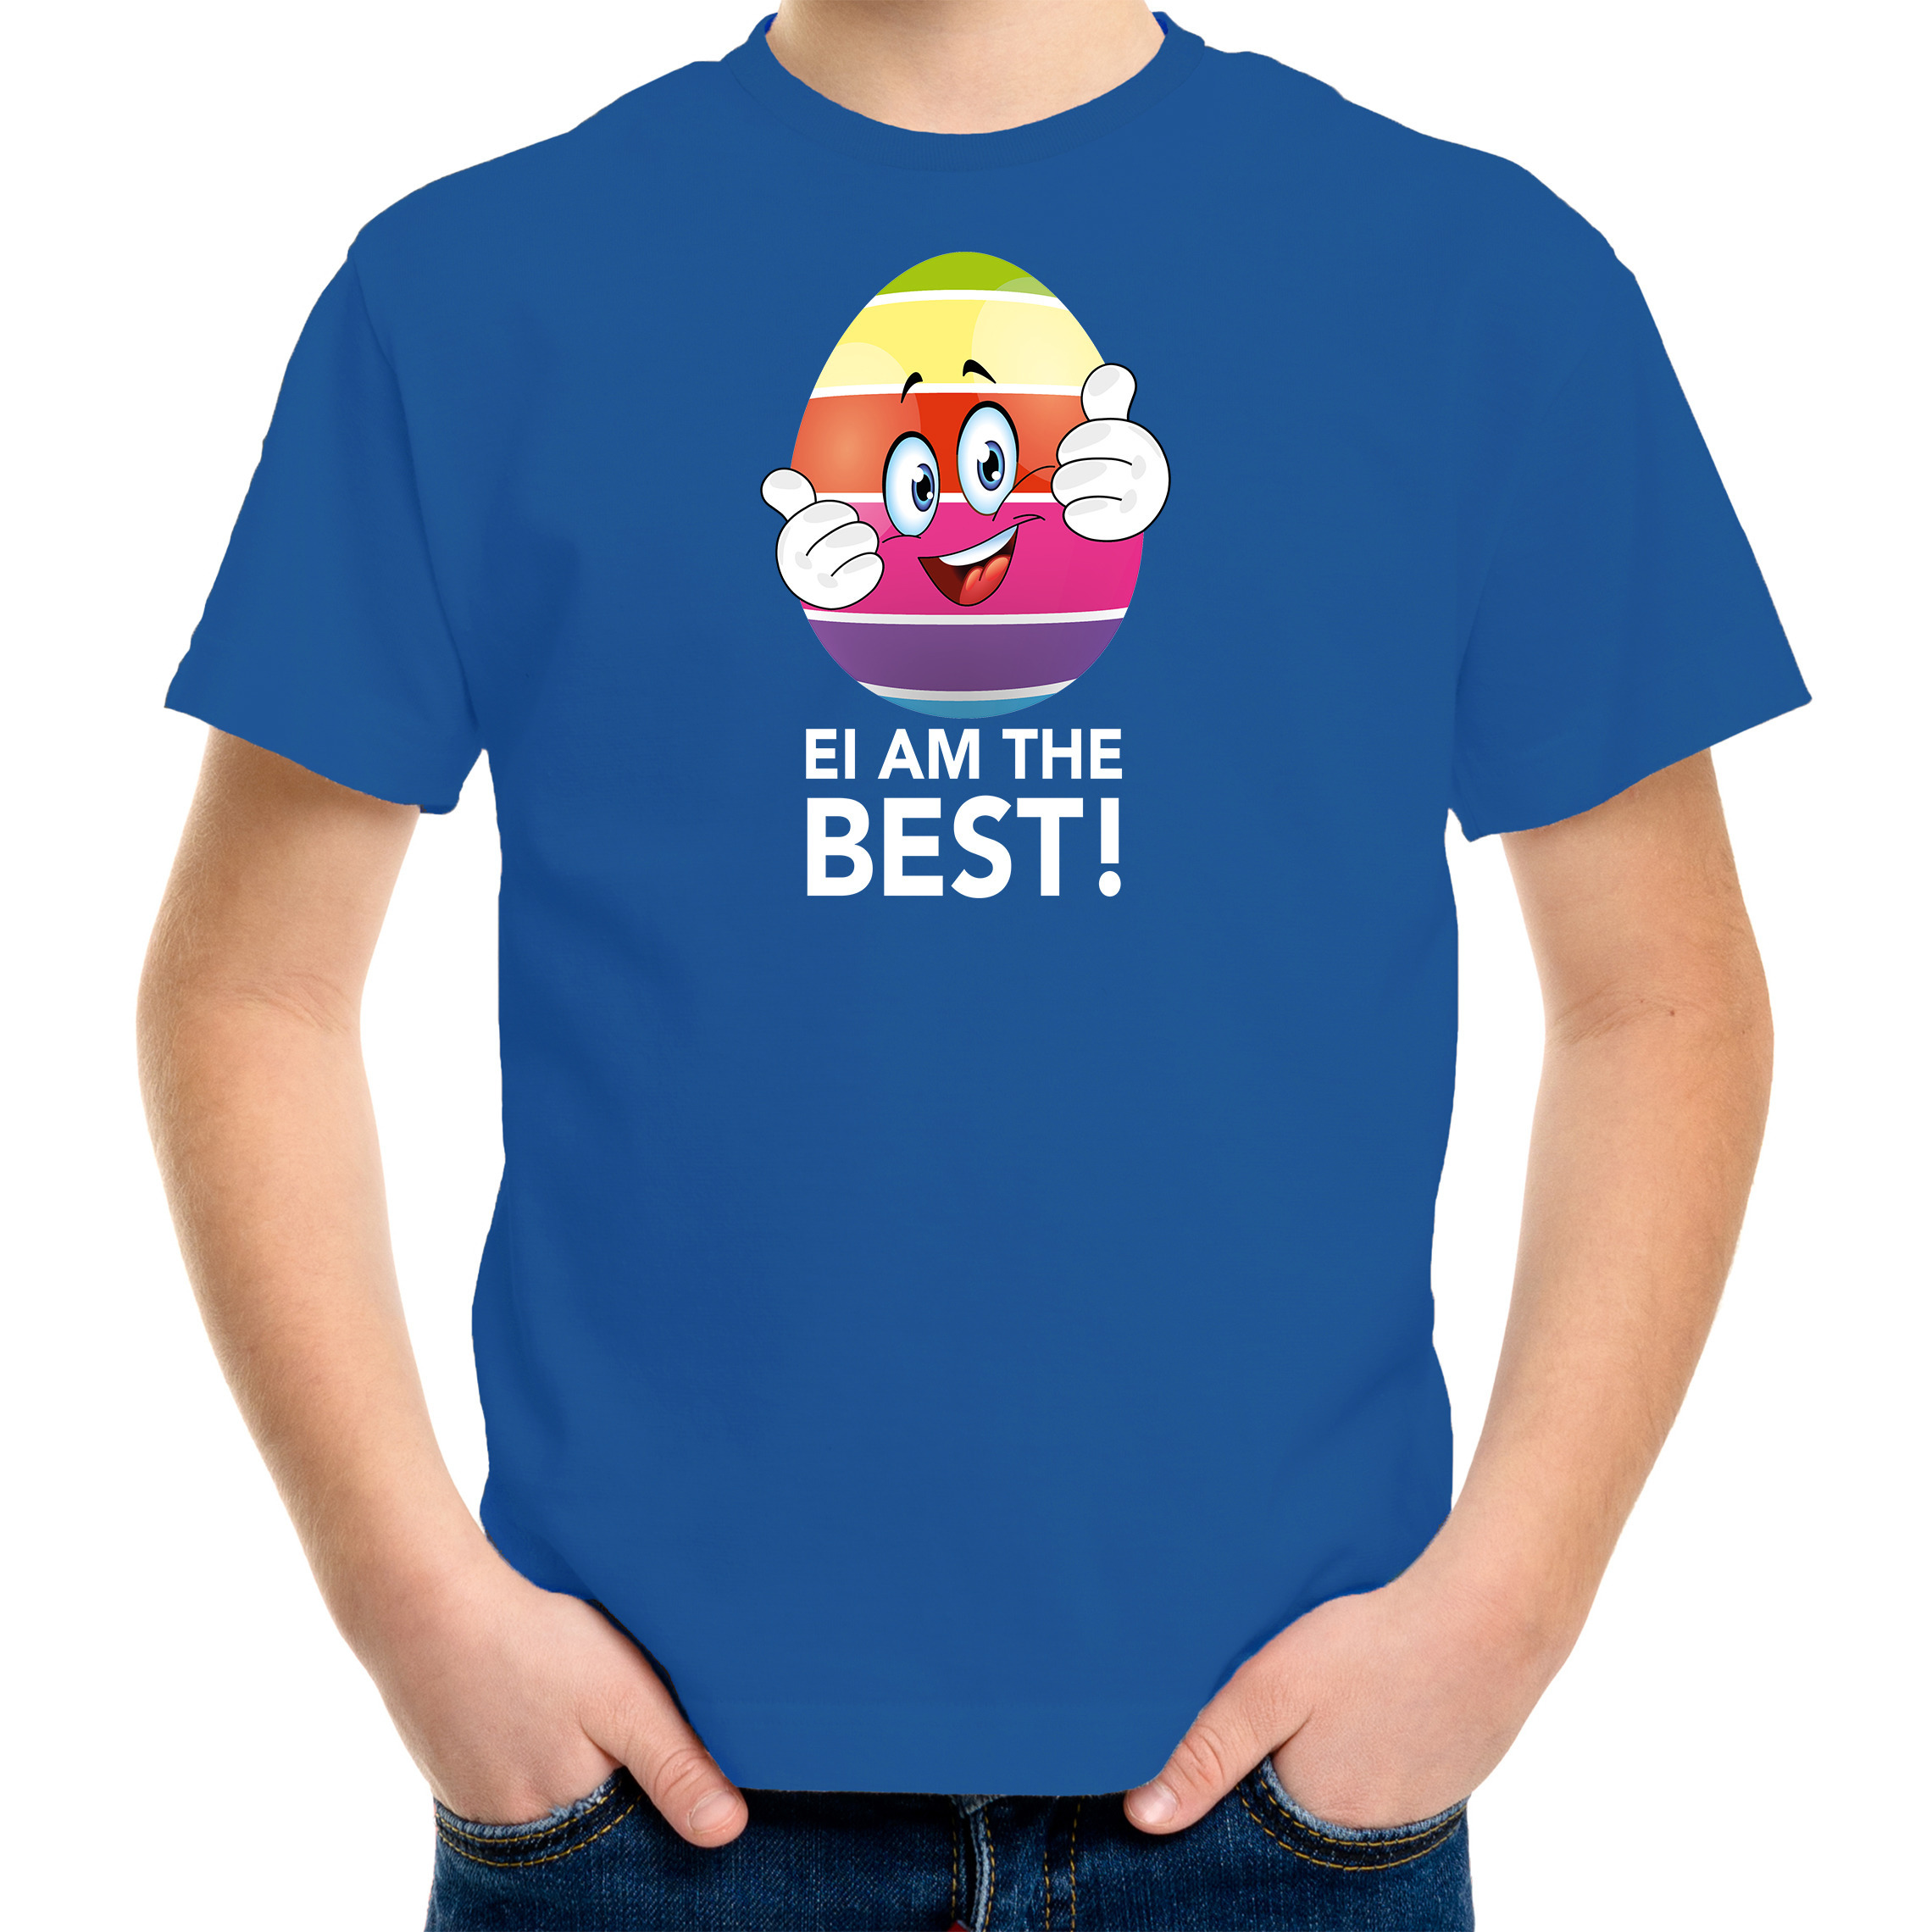 Vrolijk Paasei ei am the best t-shirt blauw voor kinderen Paas kleding-outfit